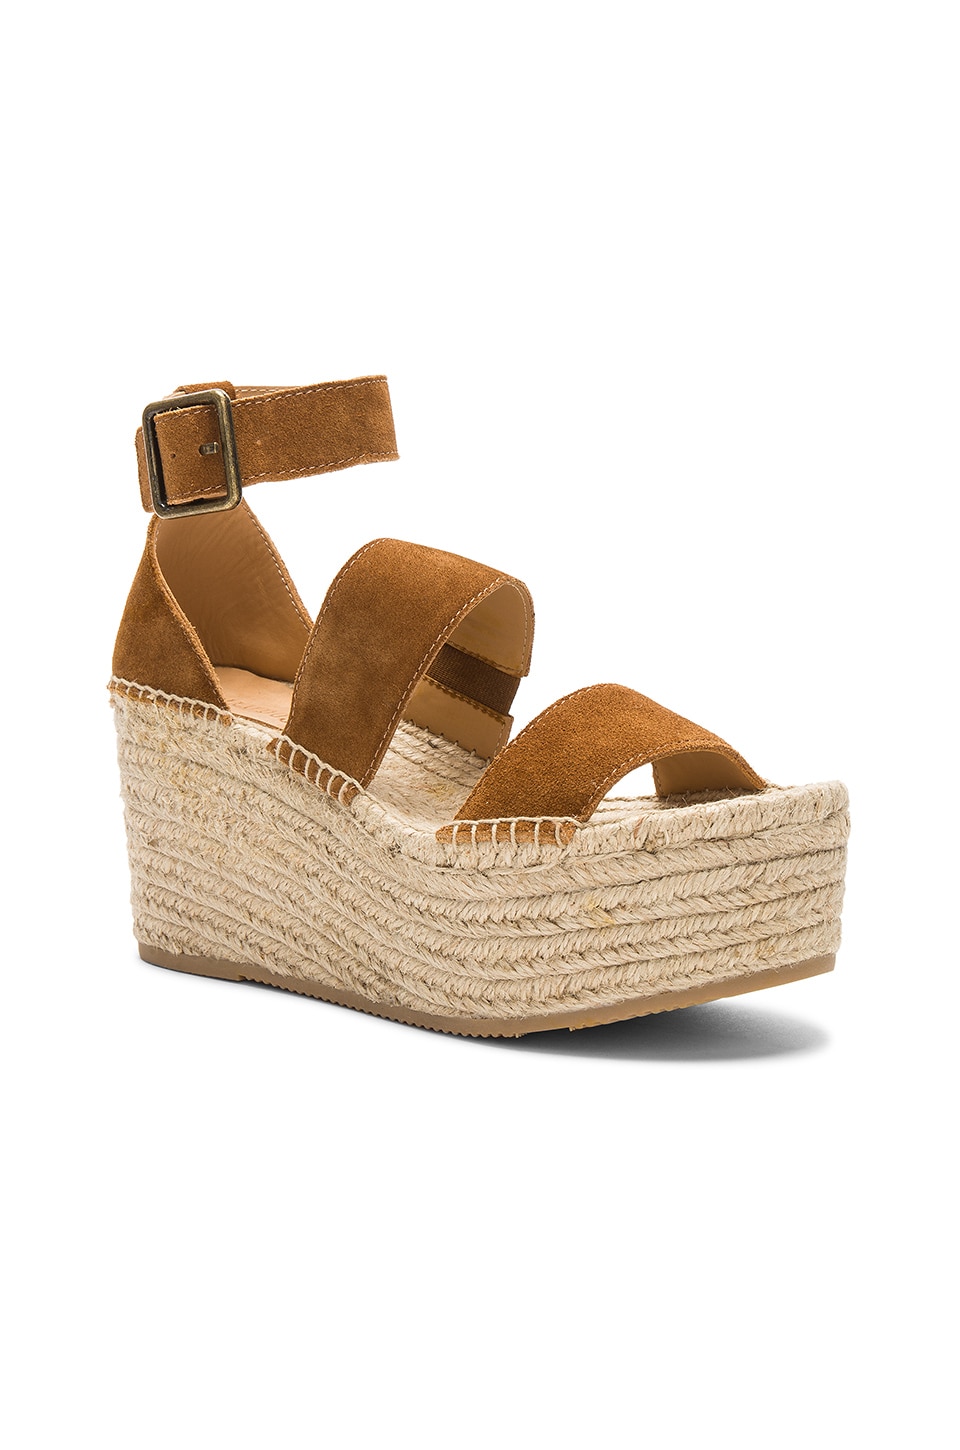 Soludos Palma Platform Sandal in Walnut | REVOLVE